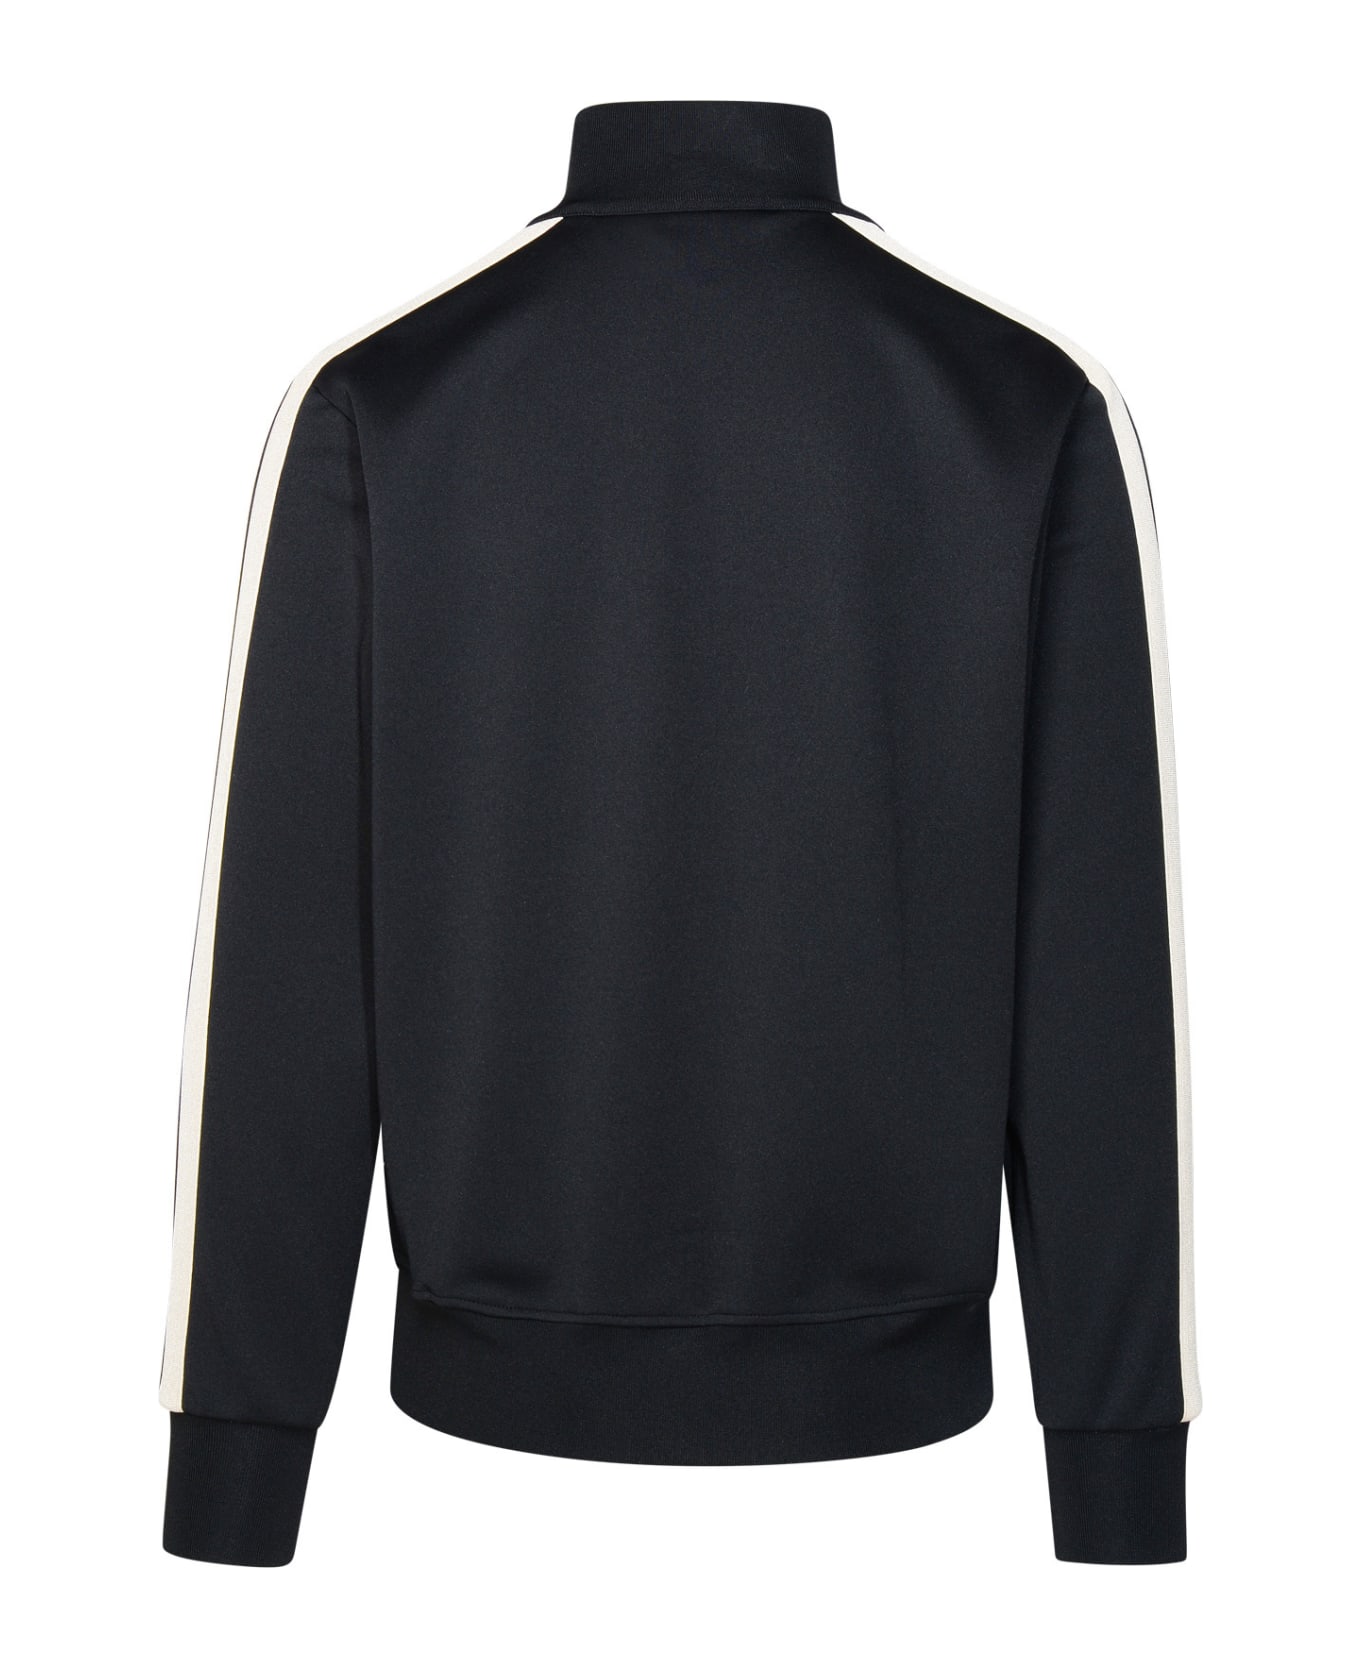 Palm Angels Black Polyester Sports Sweatshirt - Black off